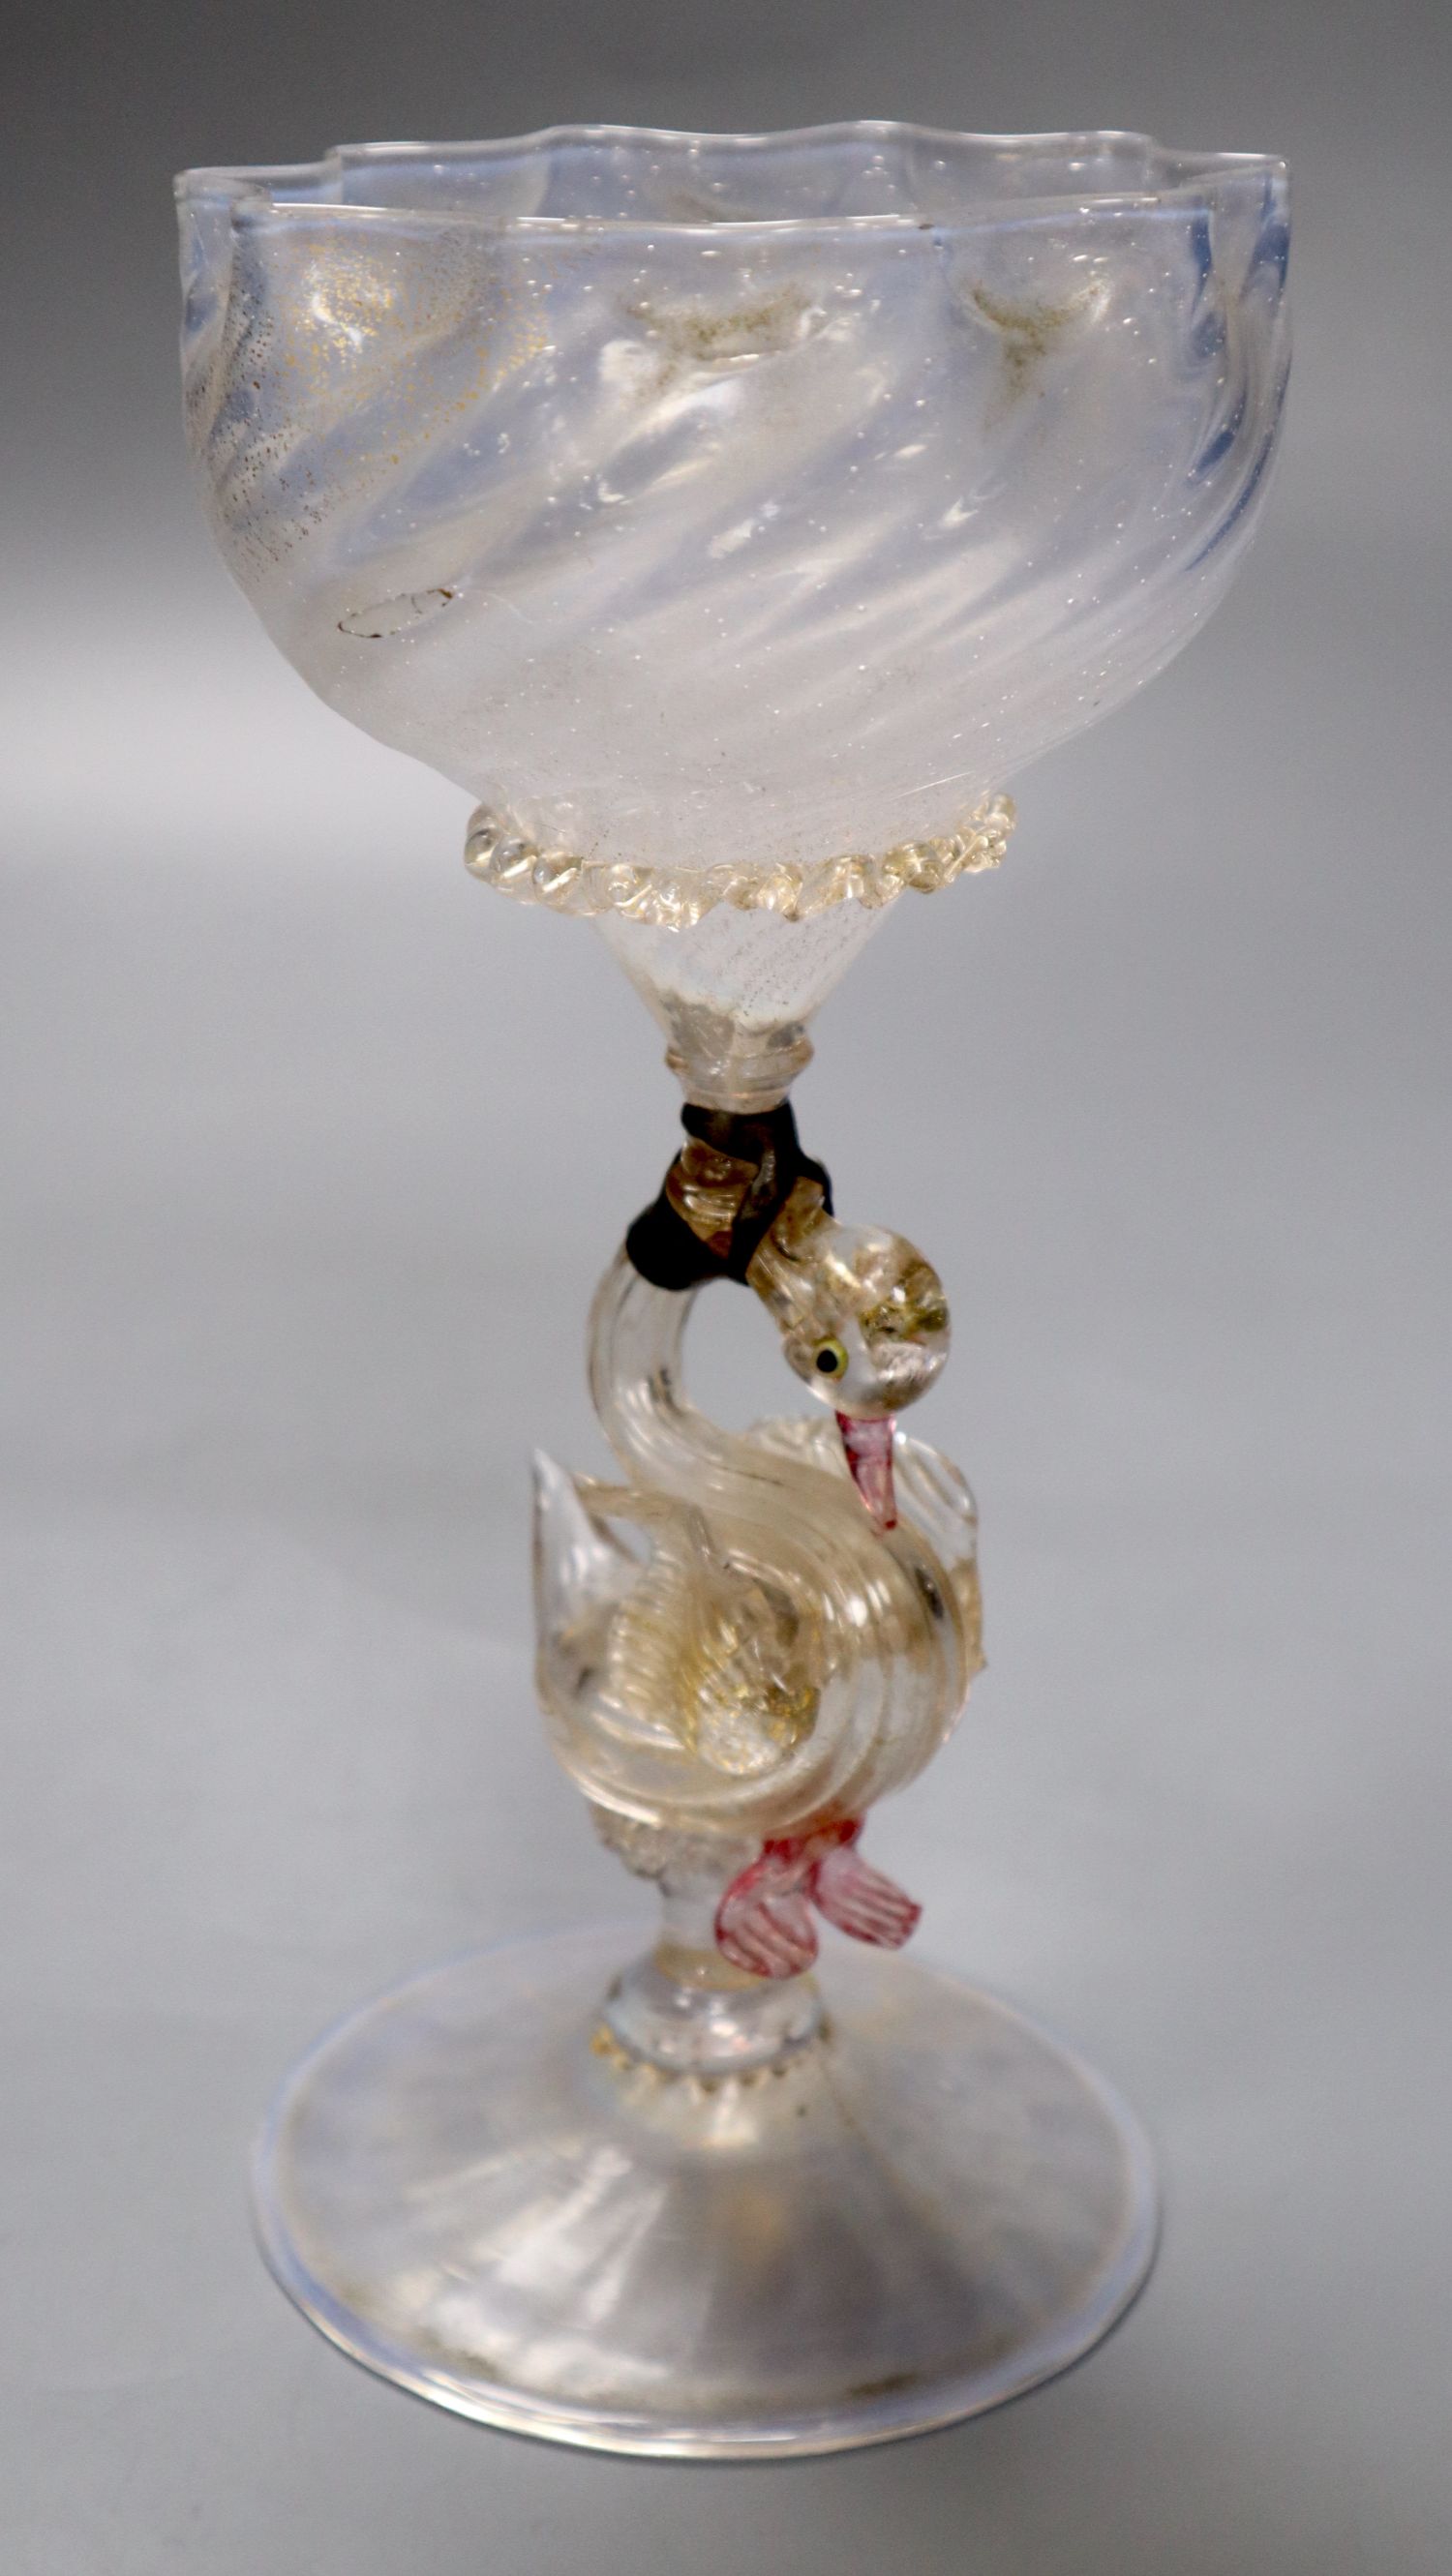 A Venetian glass goblet, height 23cm